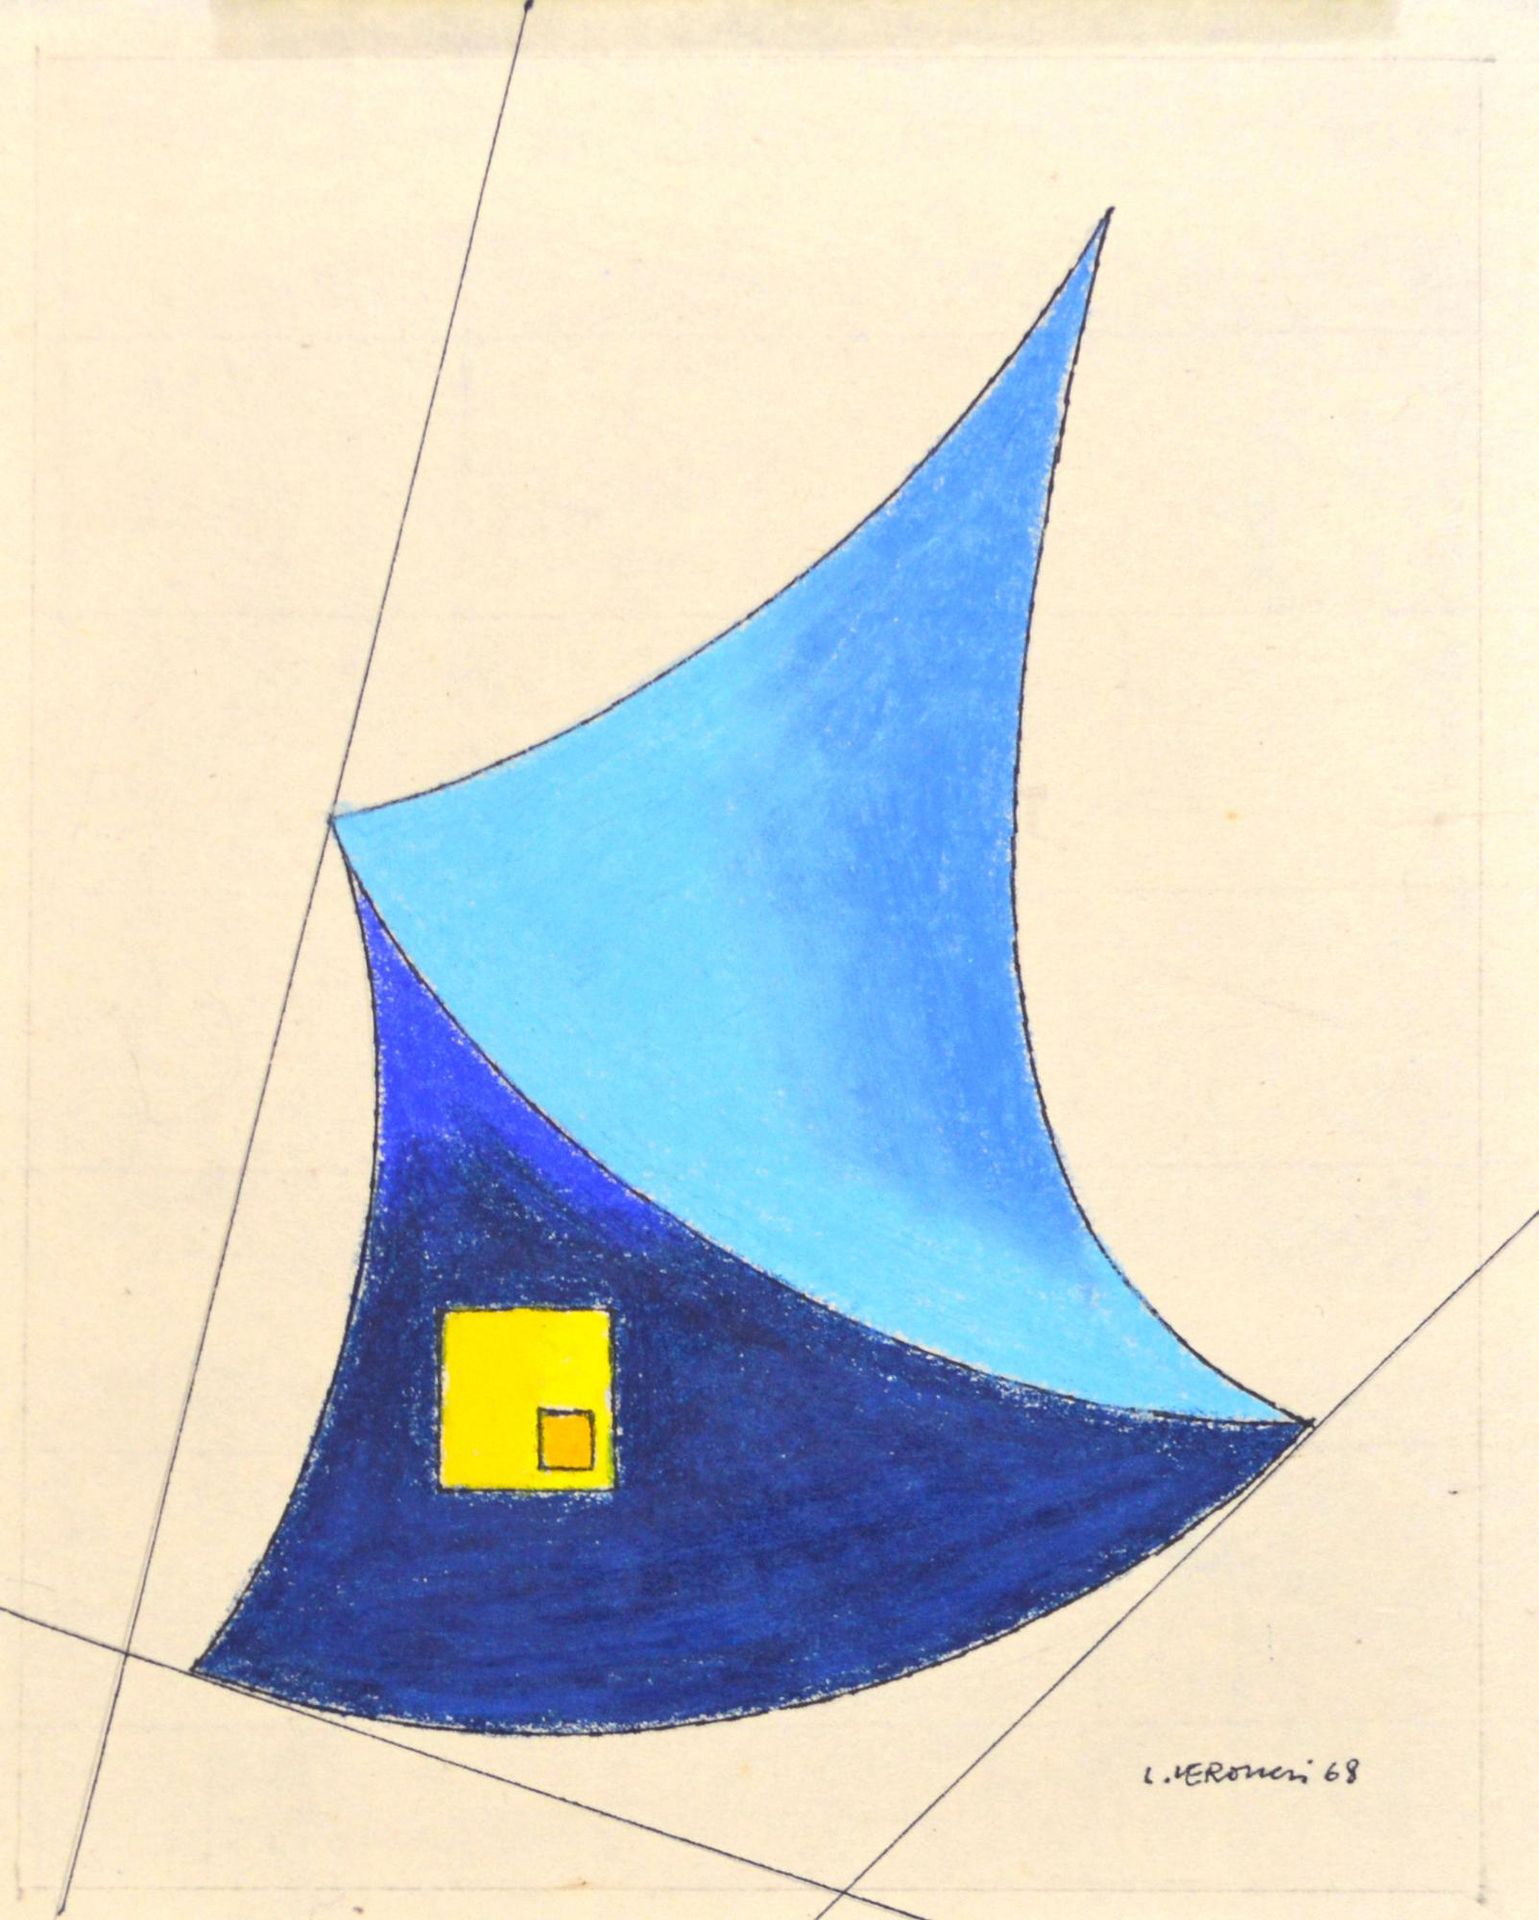 Luigi Veronesi Luigi Veronesi

COMPOSIZIONE

pastello e china su carta, cm 22x18&hellip;